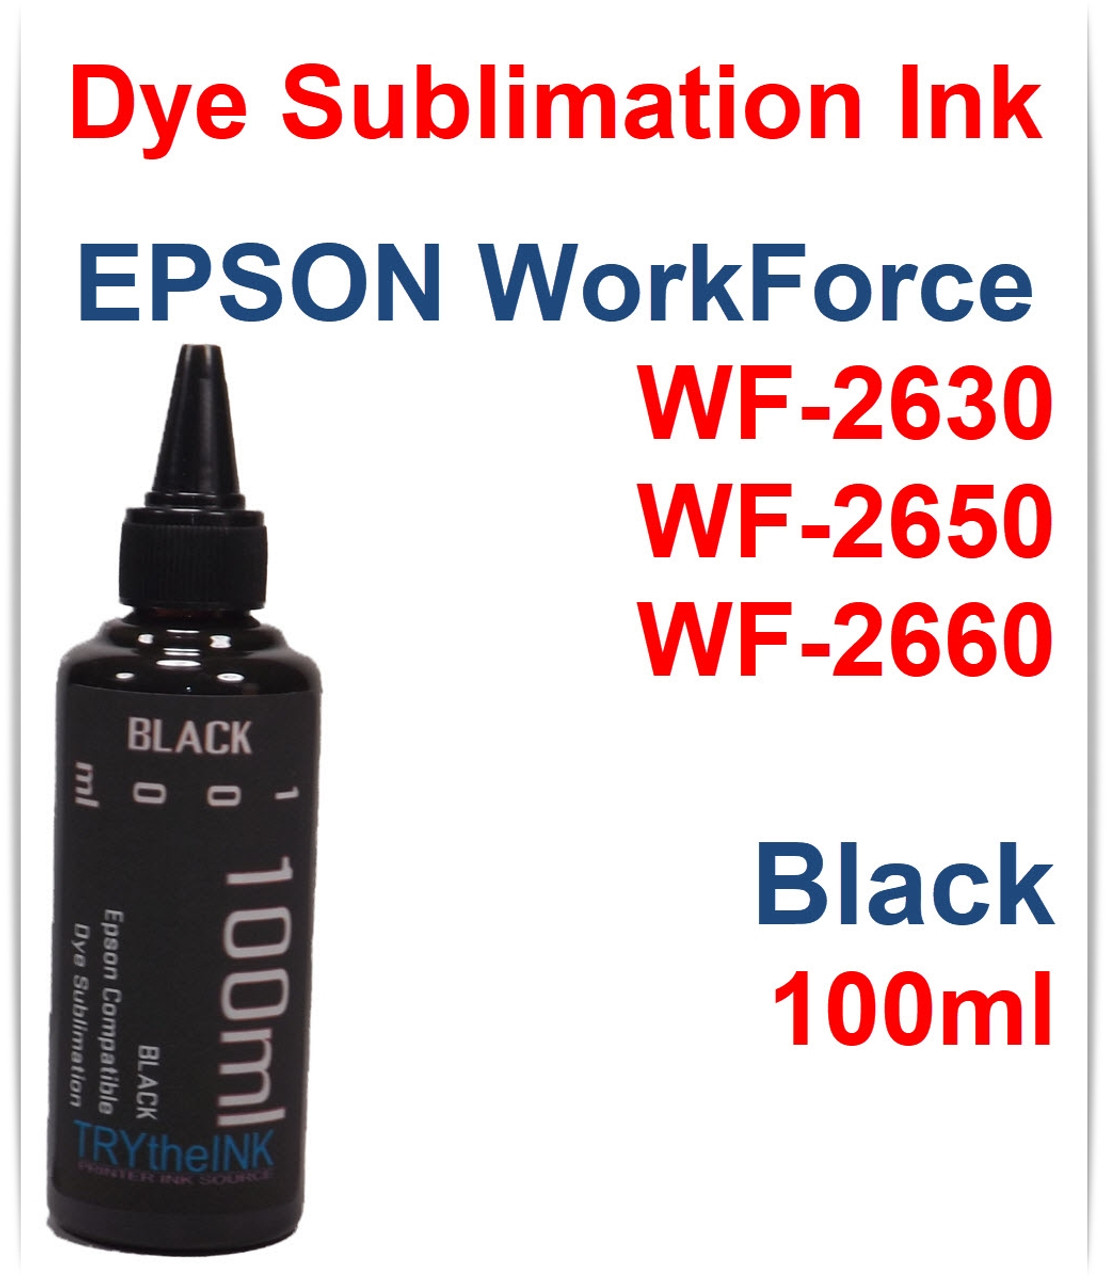 Black 100ml bottle Dye Sublimation Ink for Epson WorkForce WF-2630 WF-2650 WF-2660 Printers